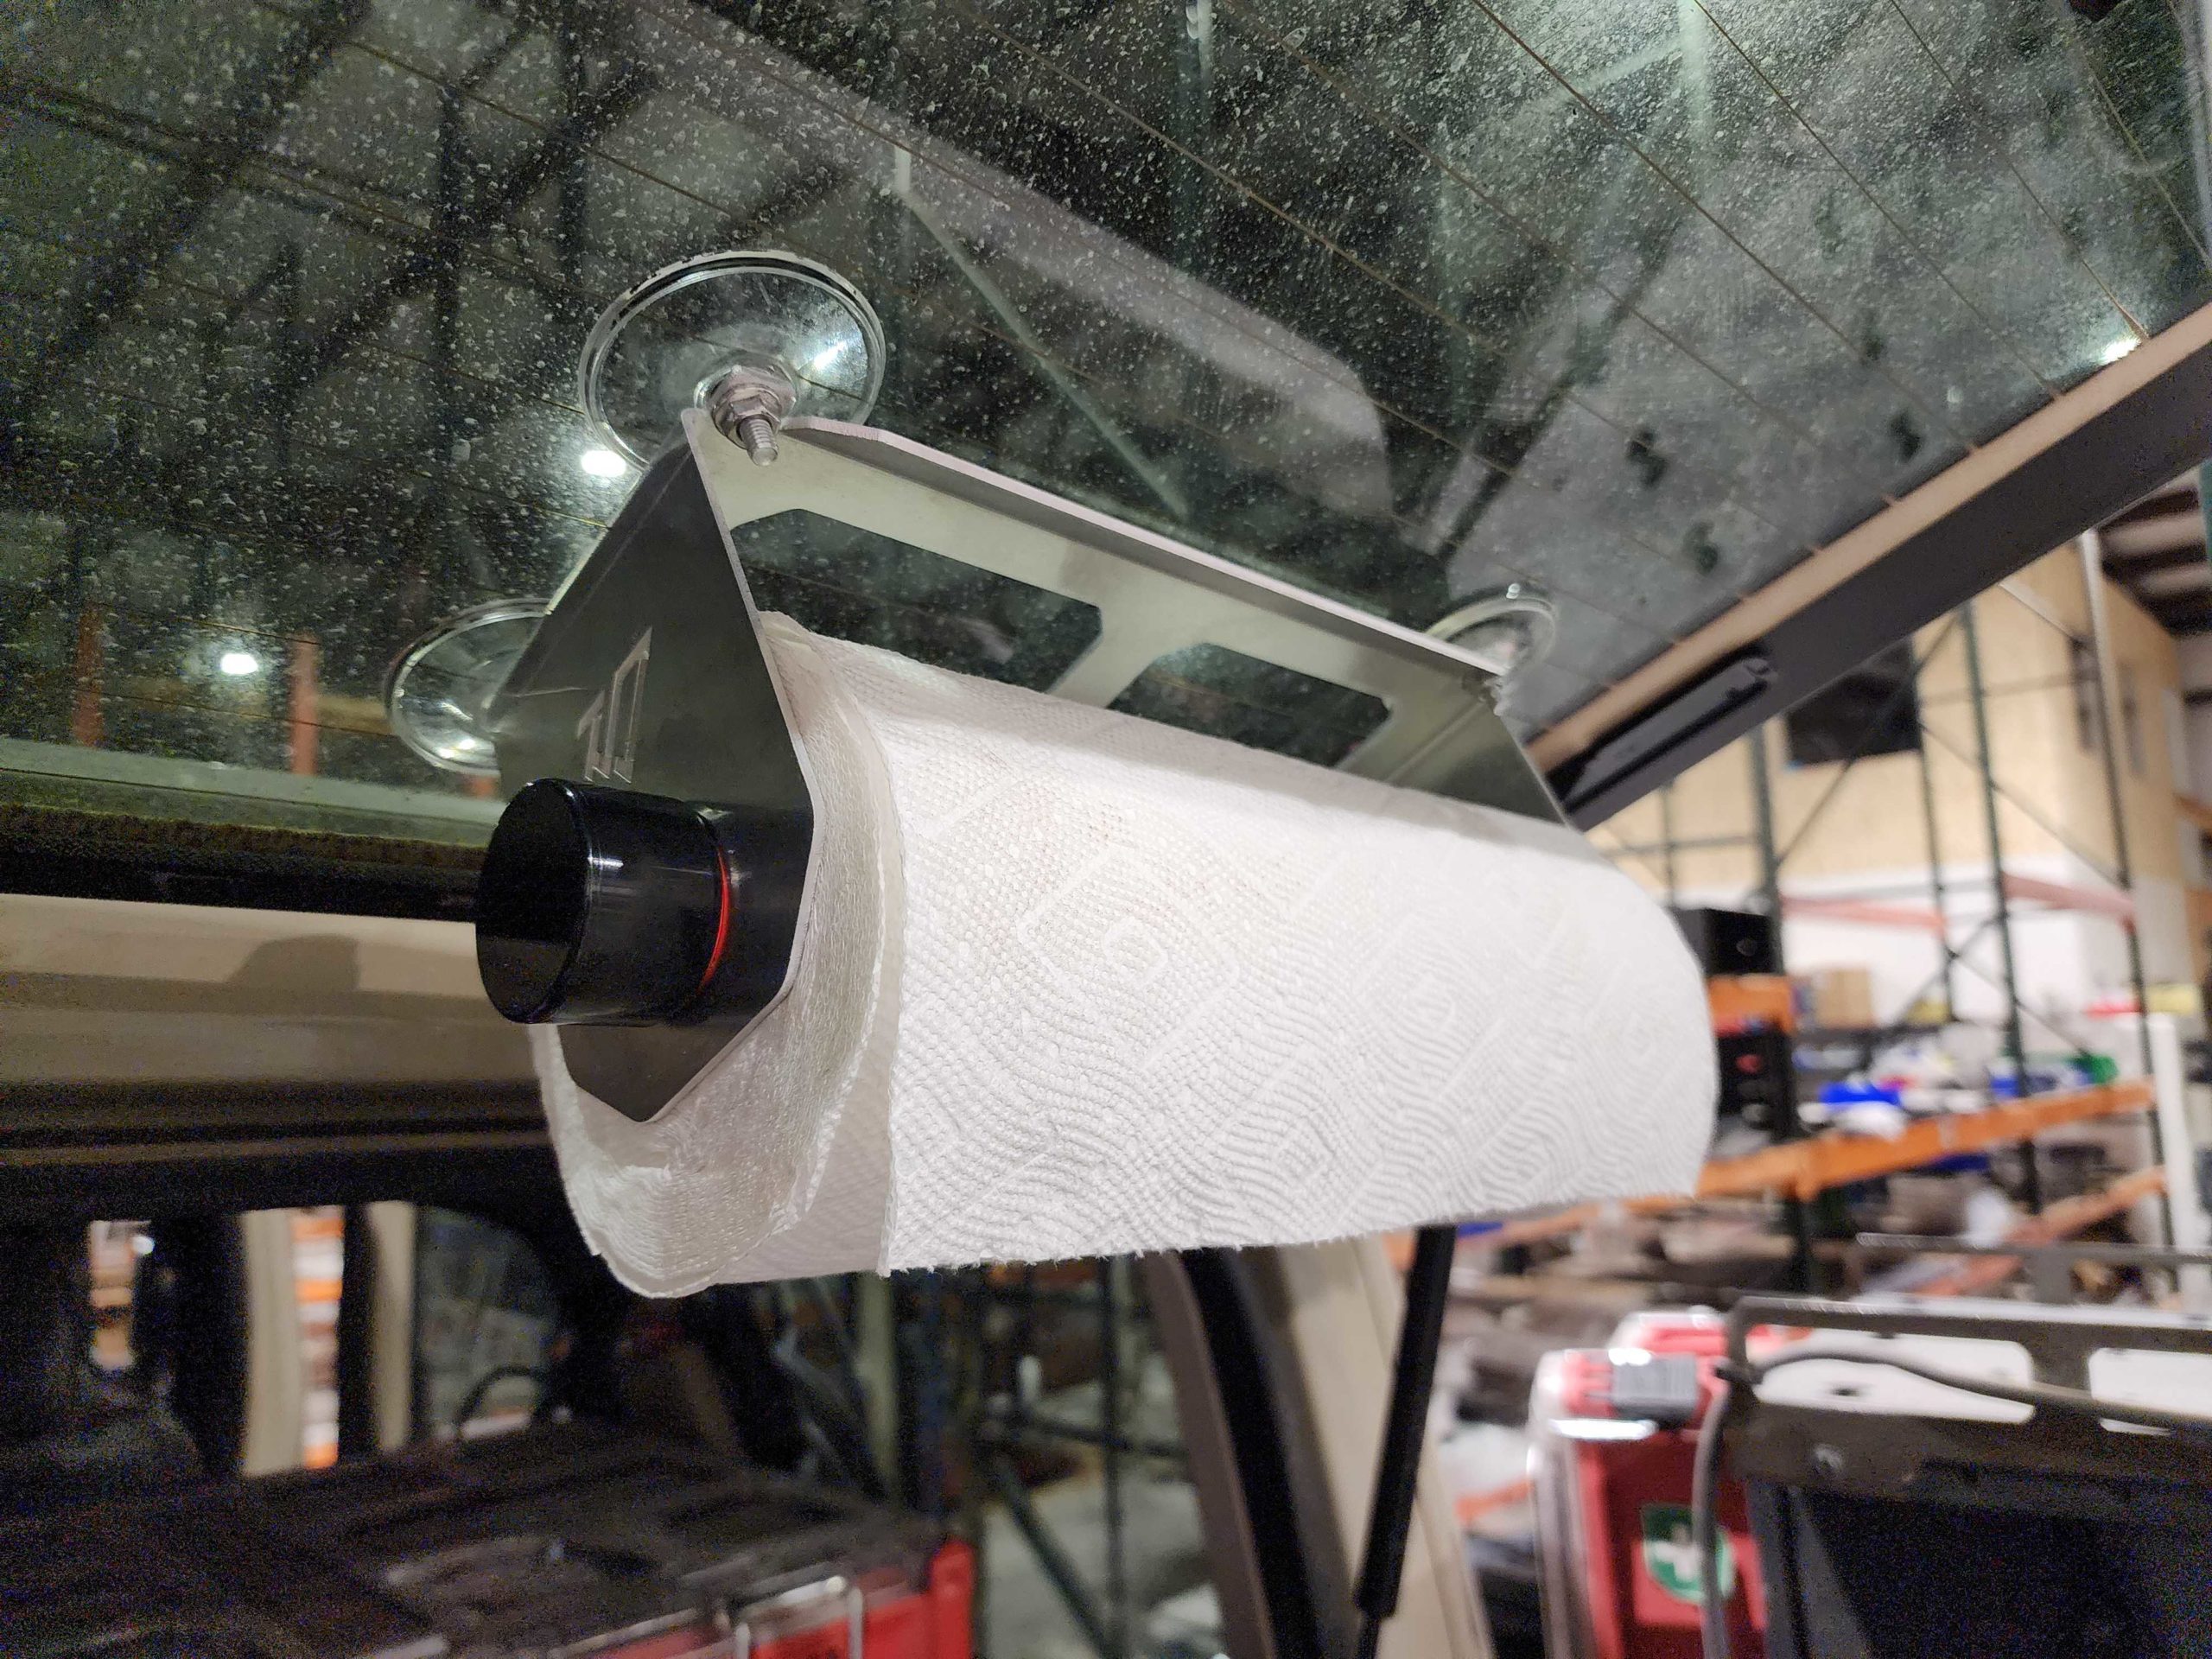 Paper Towel Holder - Revel - Canyon Adventure Vans